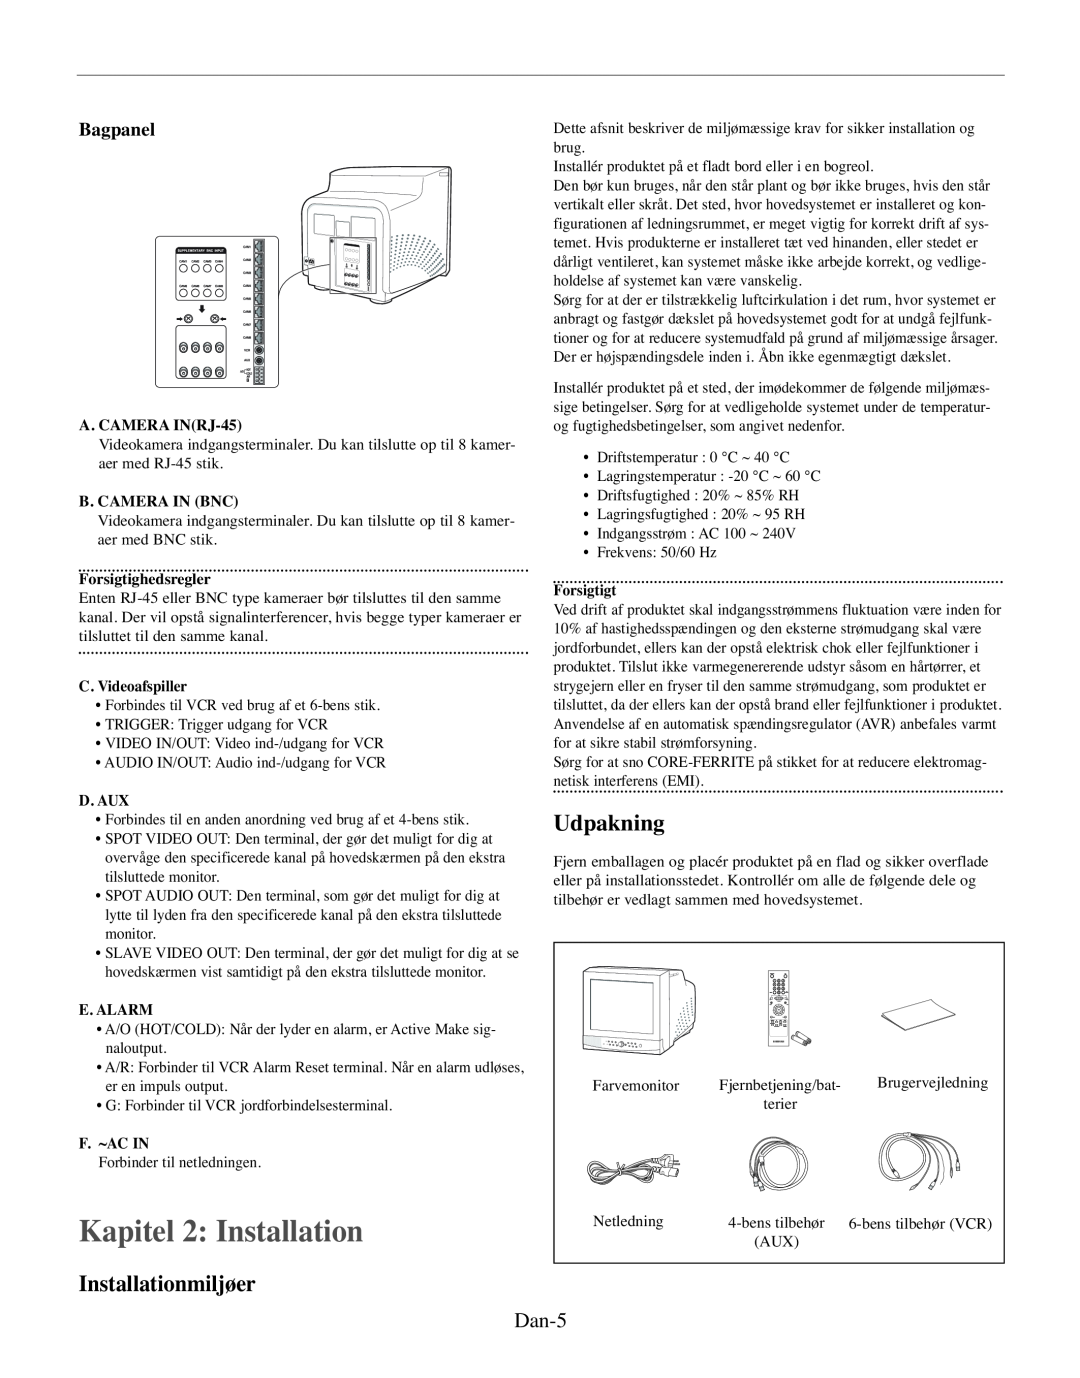 Samsung SMO-210MP/UMG Kapitel 2 Installation, Installationmiljøer, Udpakning, Dan-5, Bagpanel, A. CAMERA INRJ-45, D. Aux 